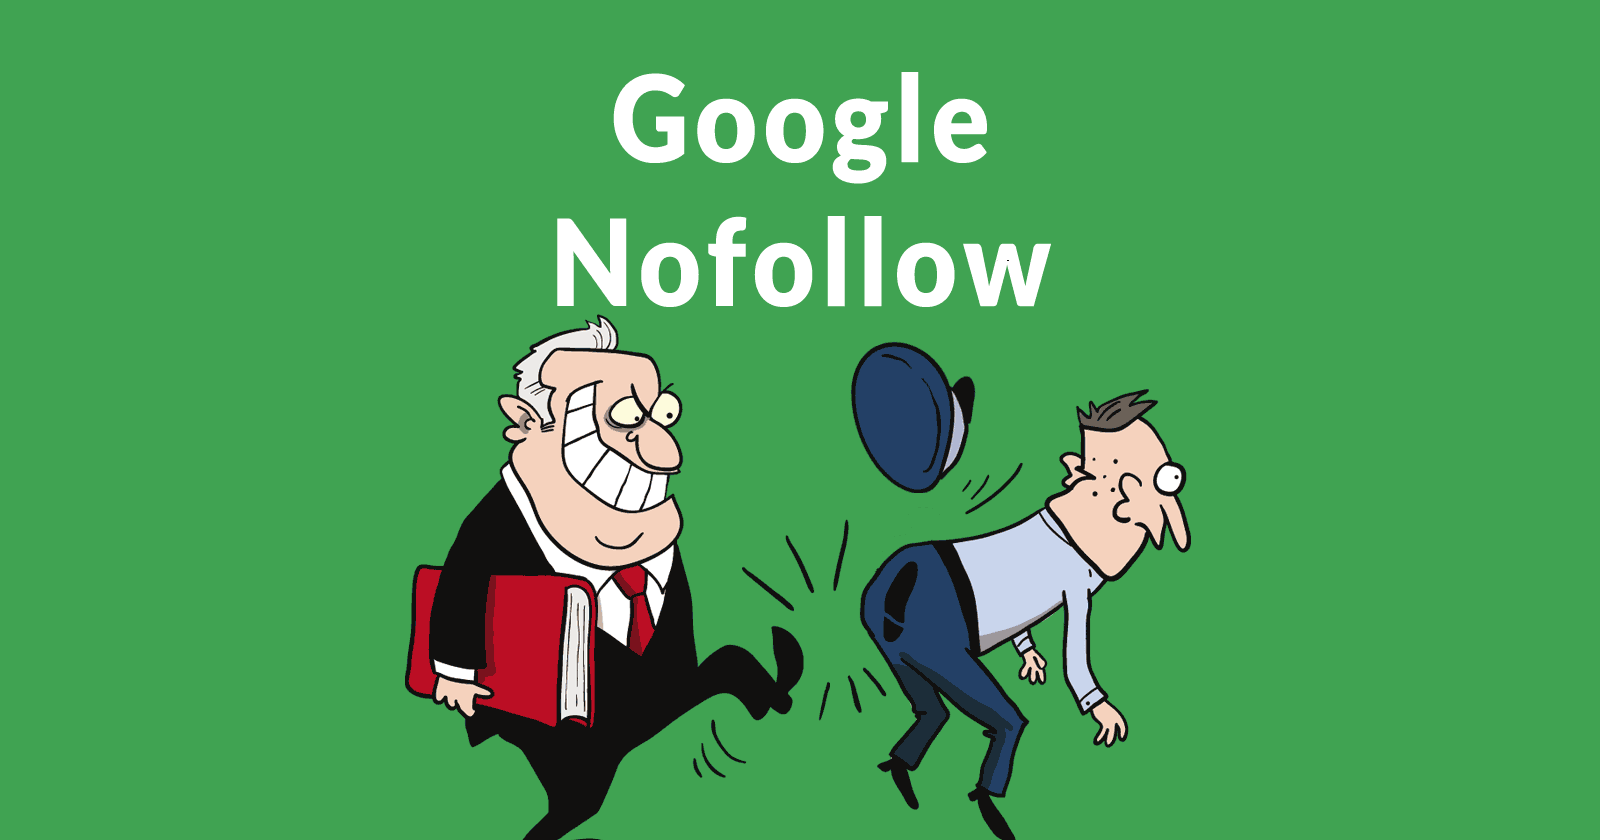 Google nofollow link advice